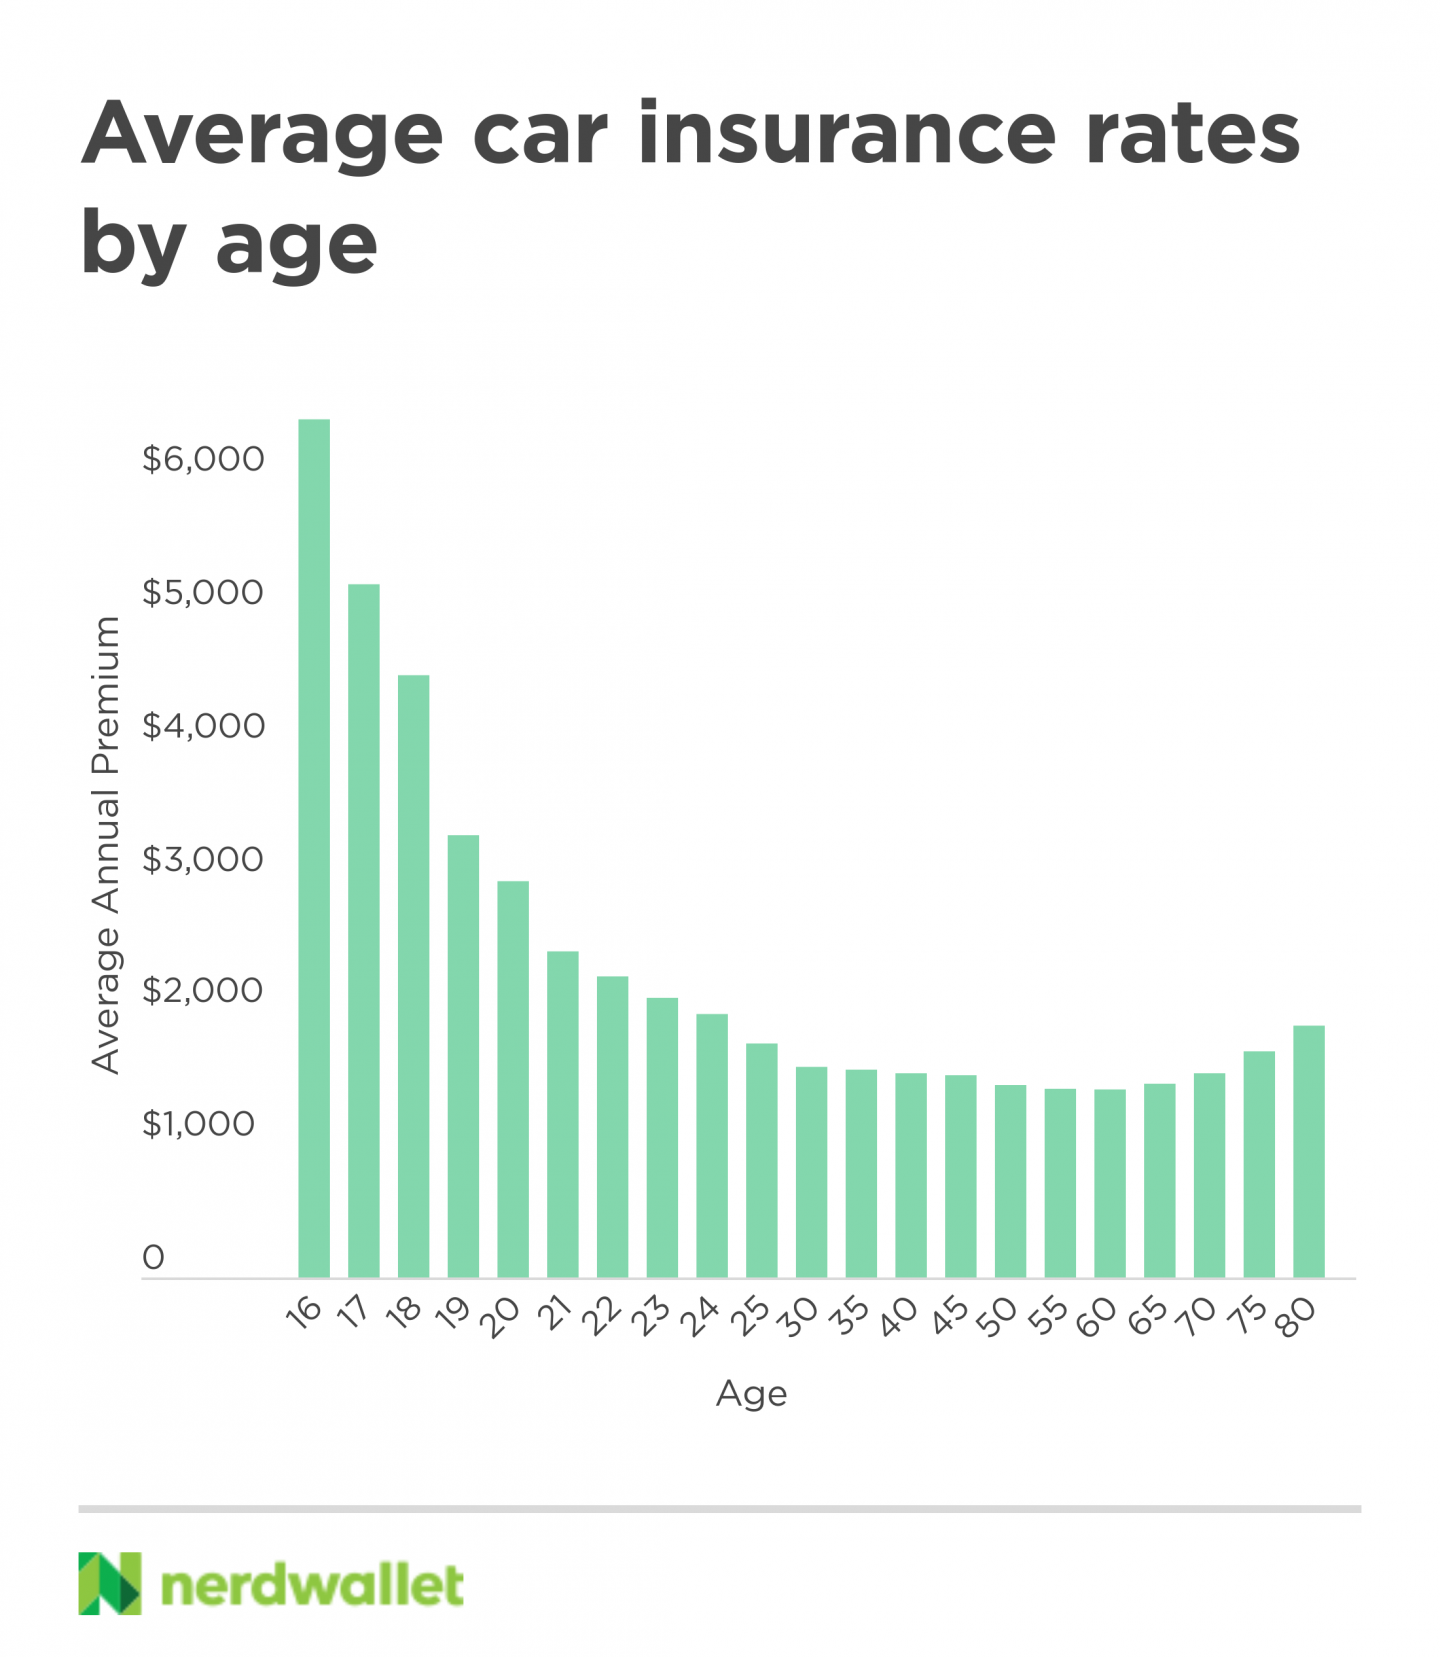 Virginia Auto Insurance Rates Average Cost Of Car Insurance Per Month In Virginia By Virginia